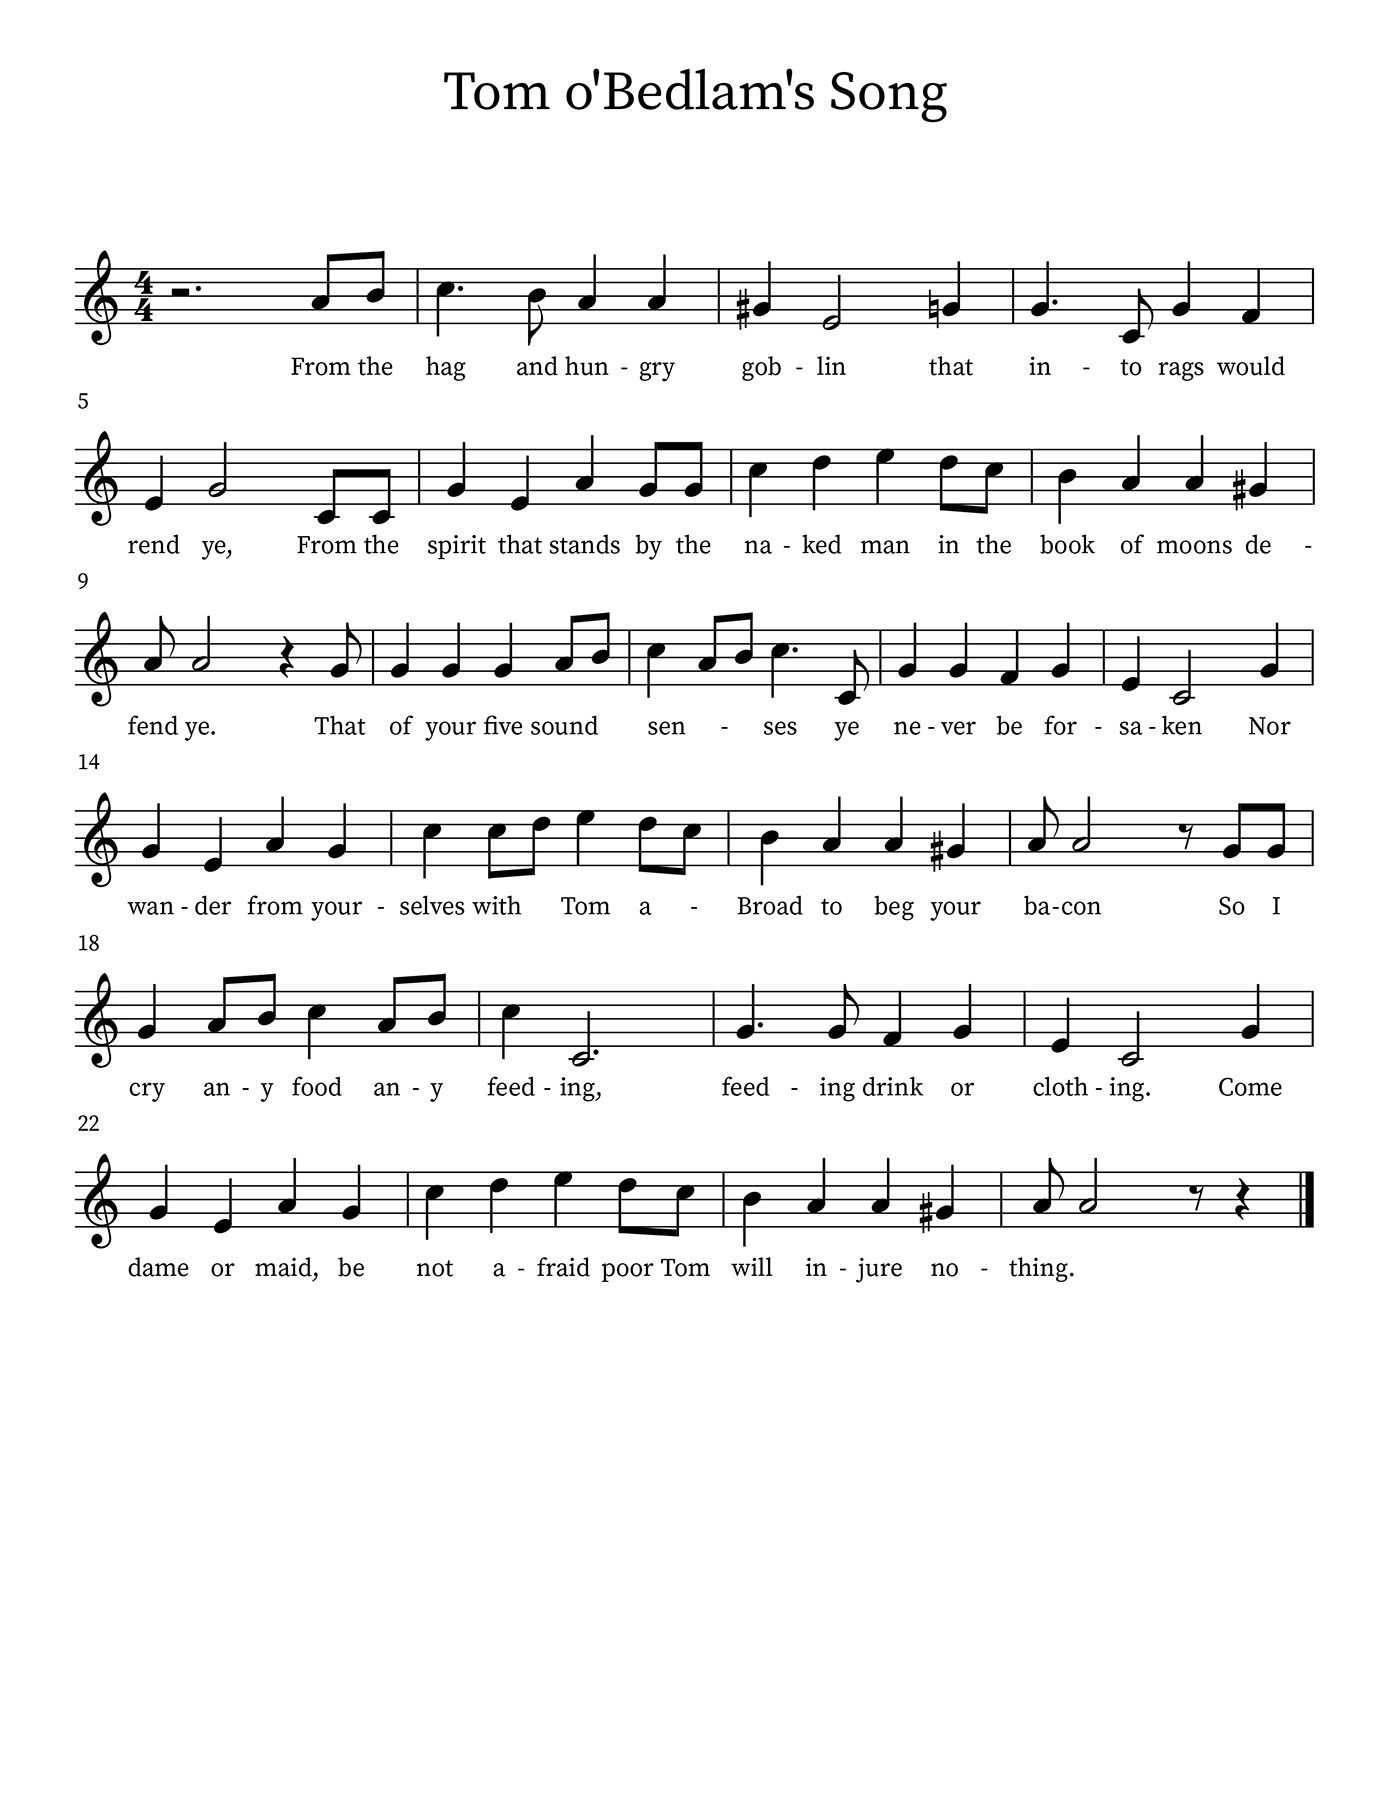 "Tom o'Bedlam" sheet music